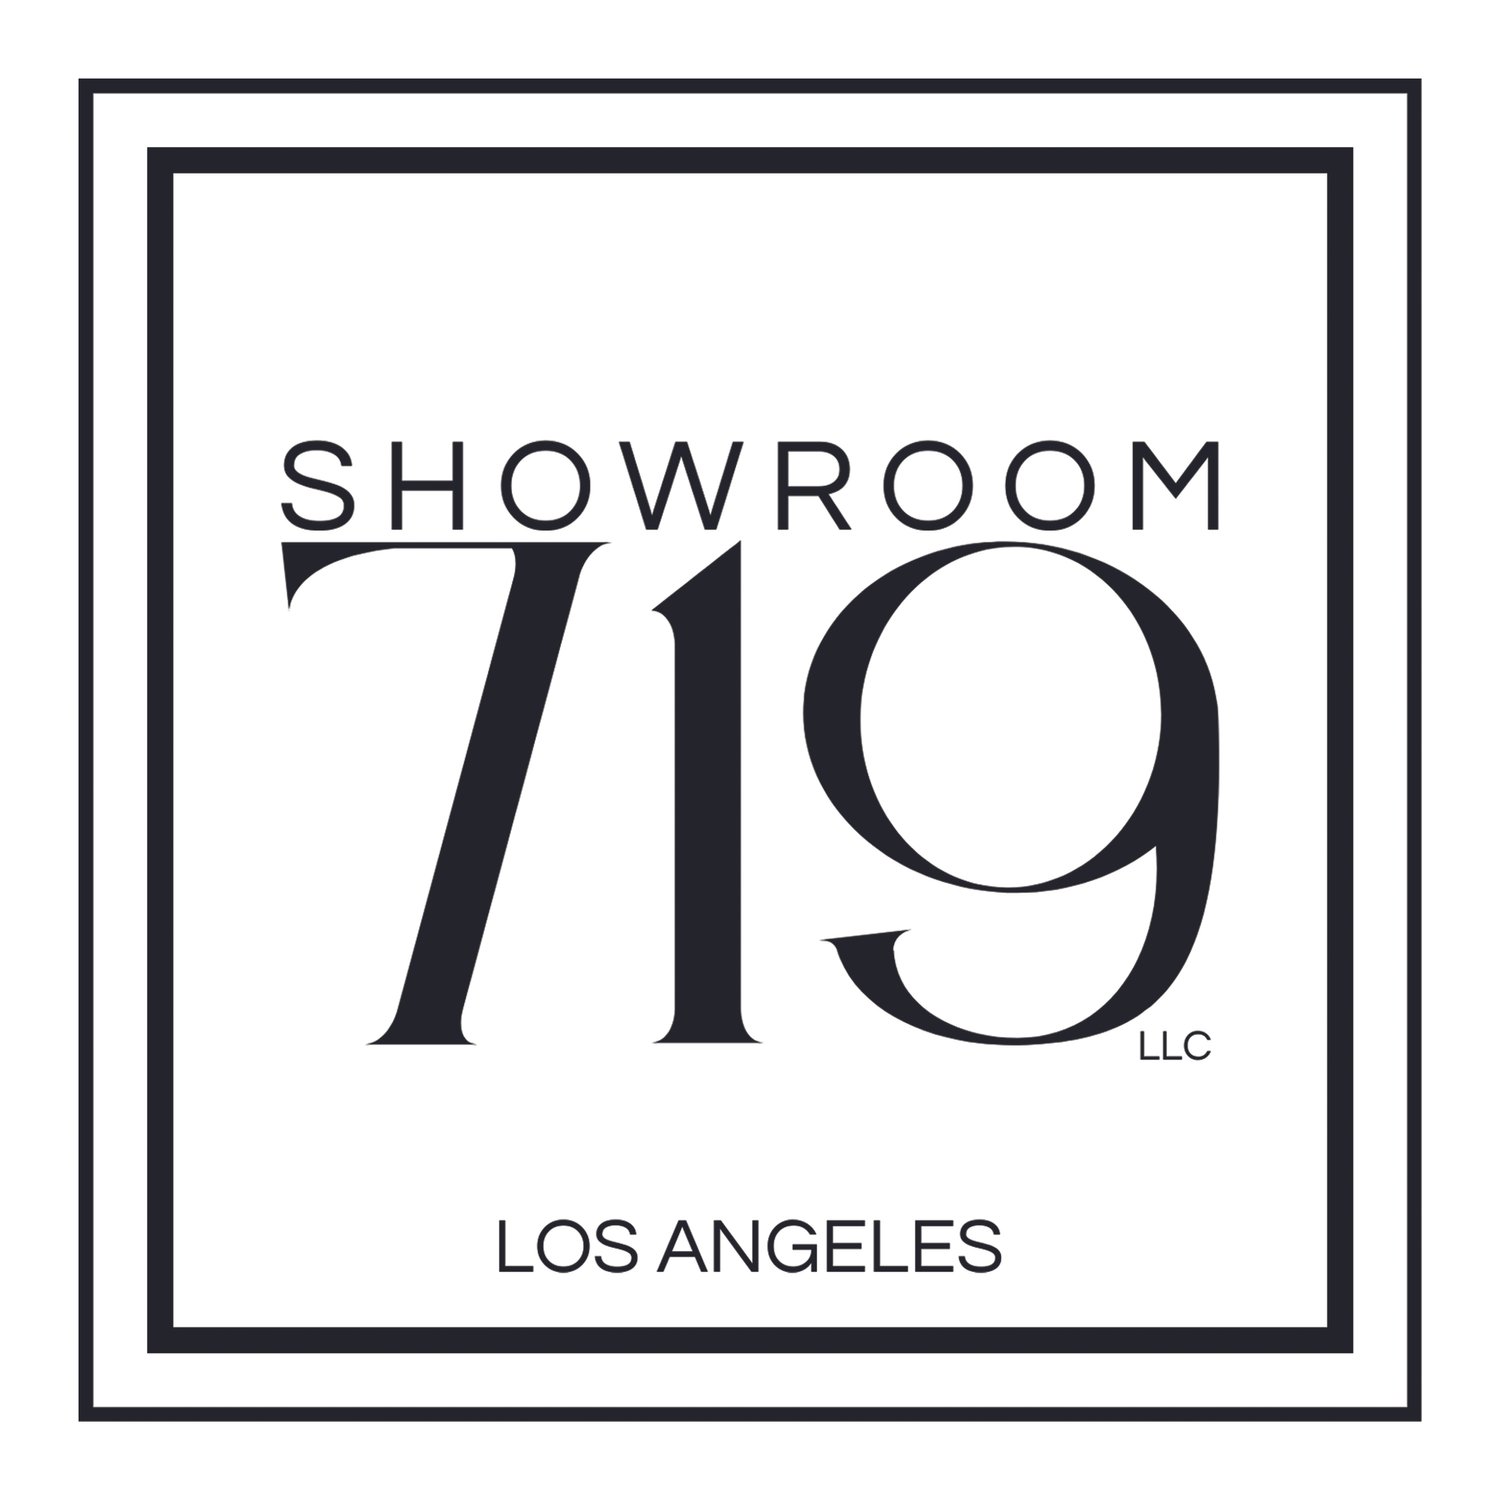 Showroom 719